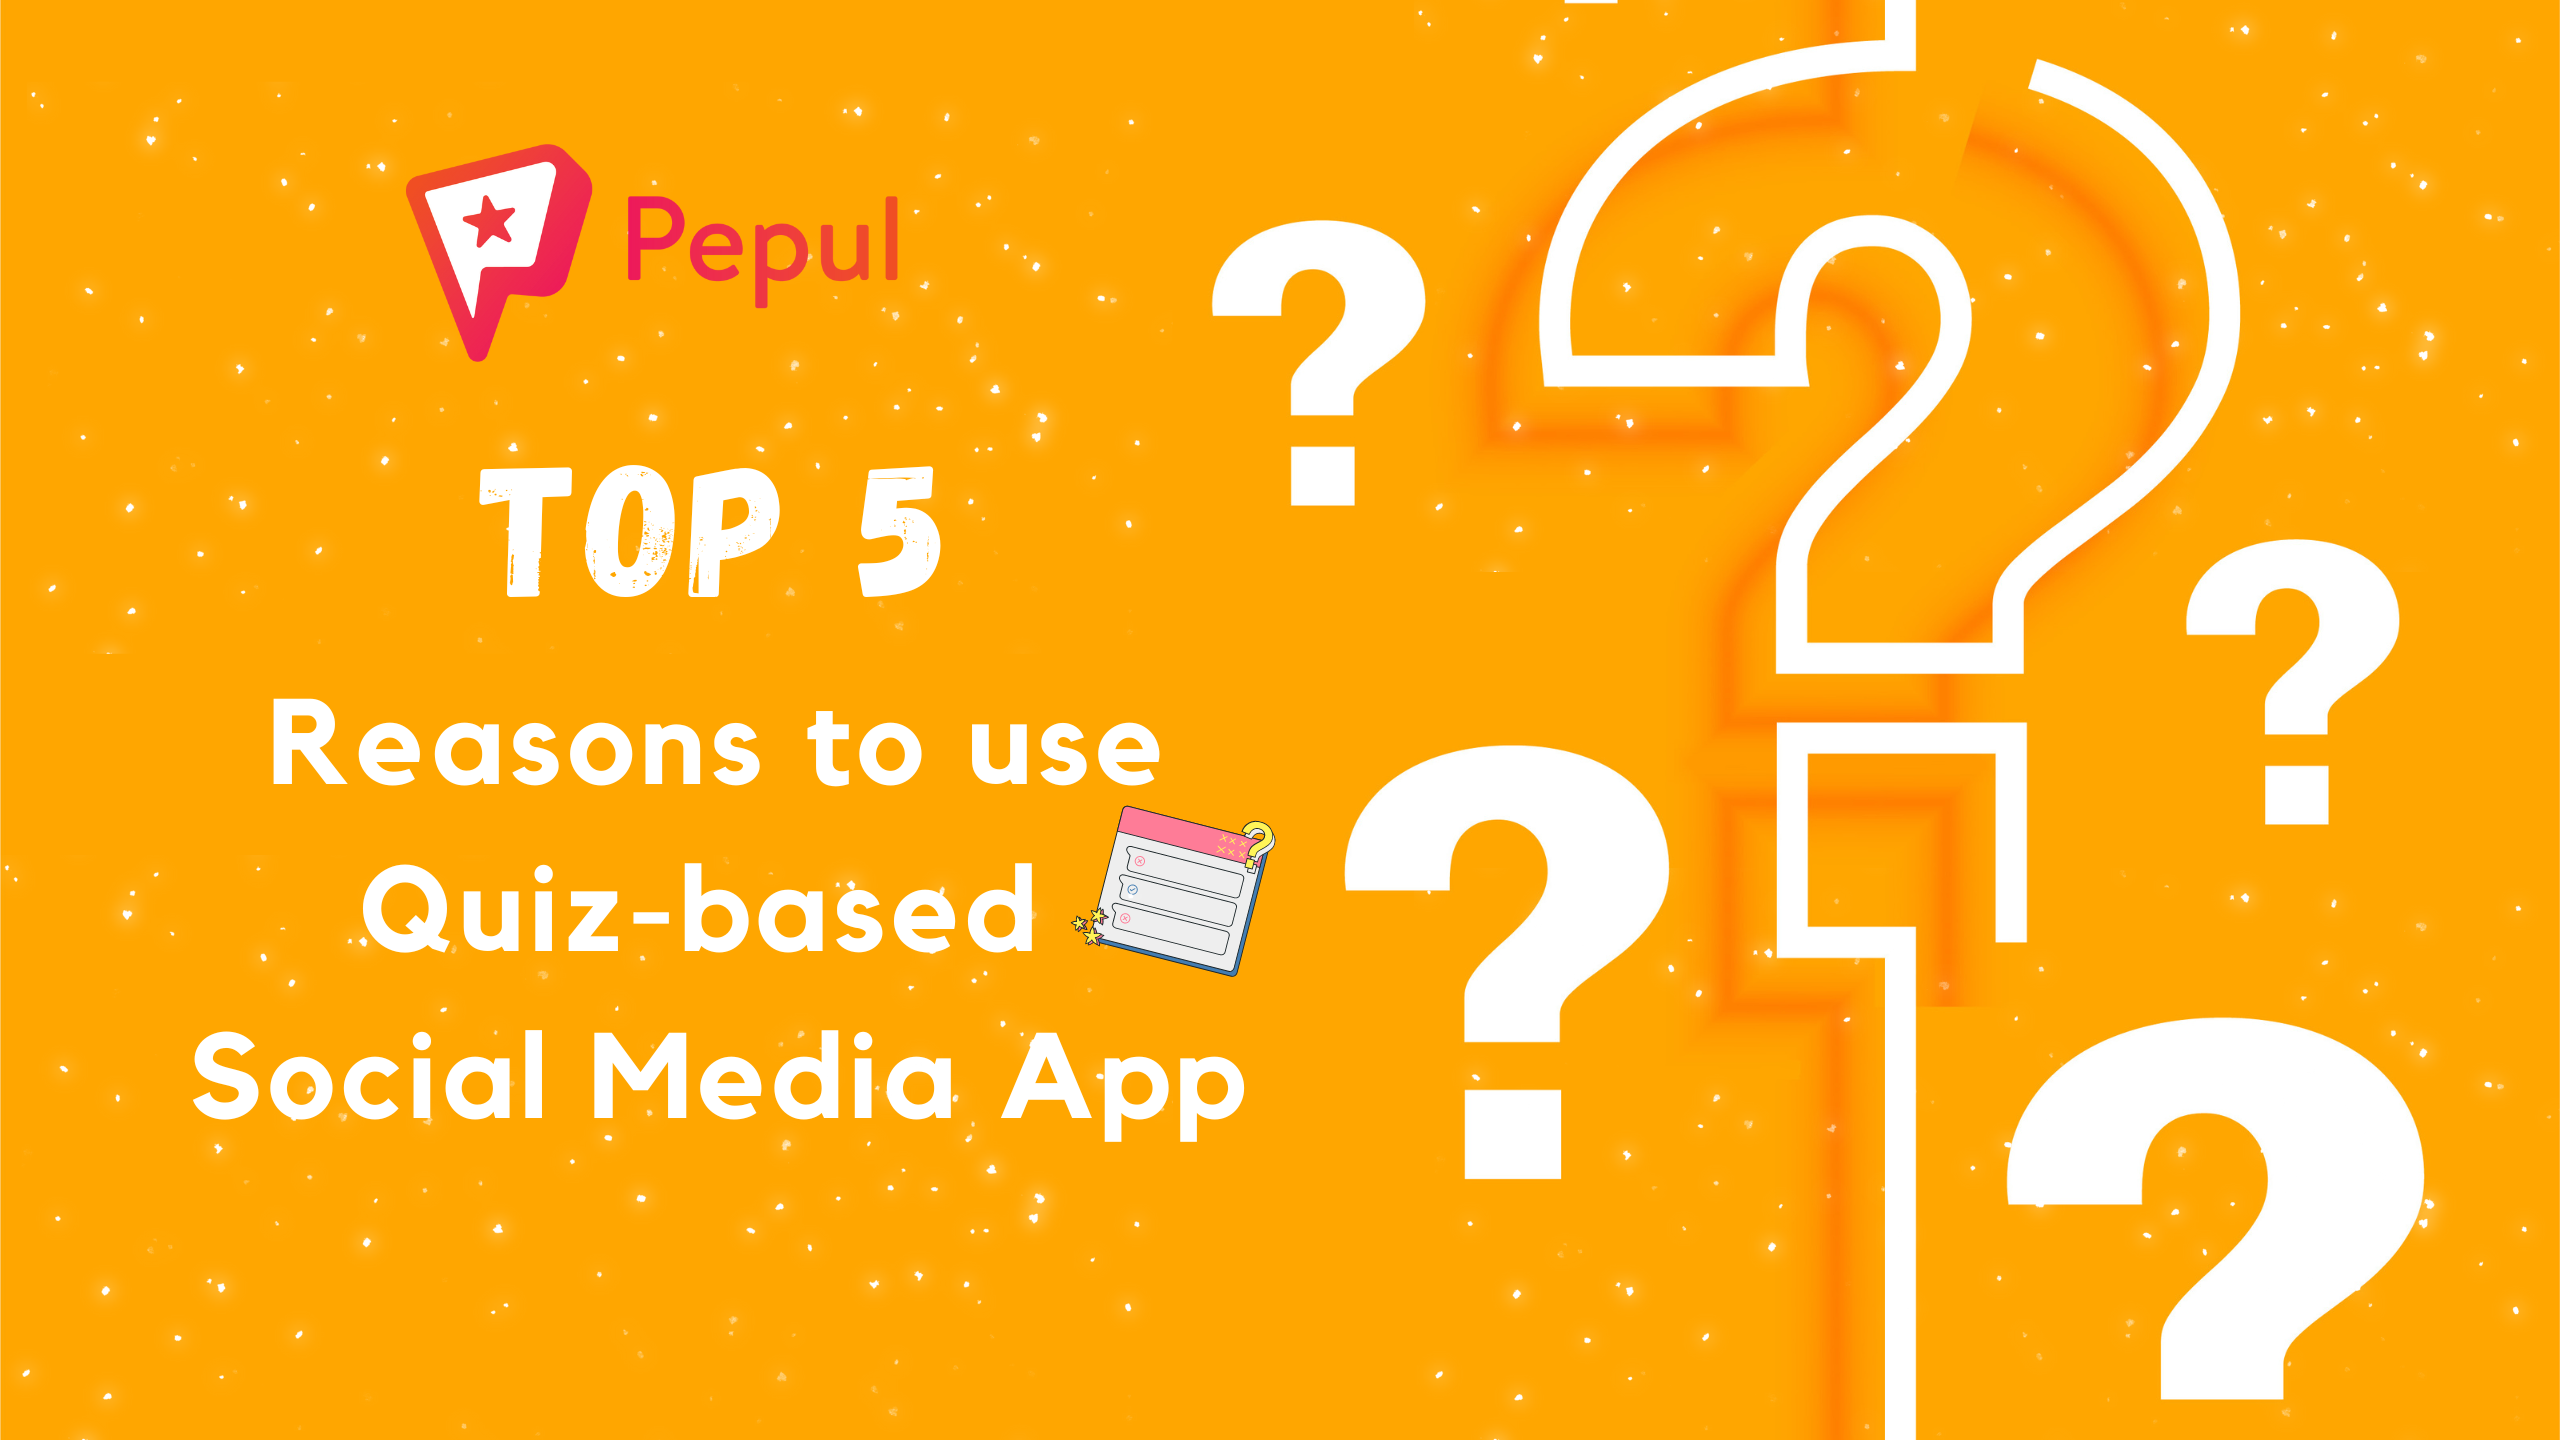 Top 5 Reasons for using a Quiz-based Social Media App